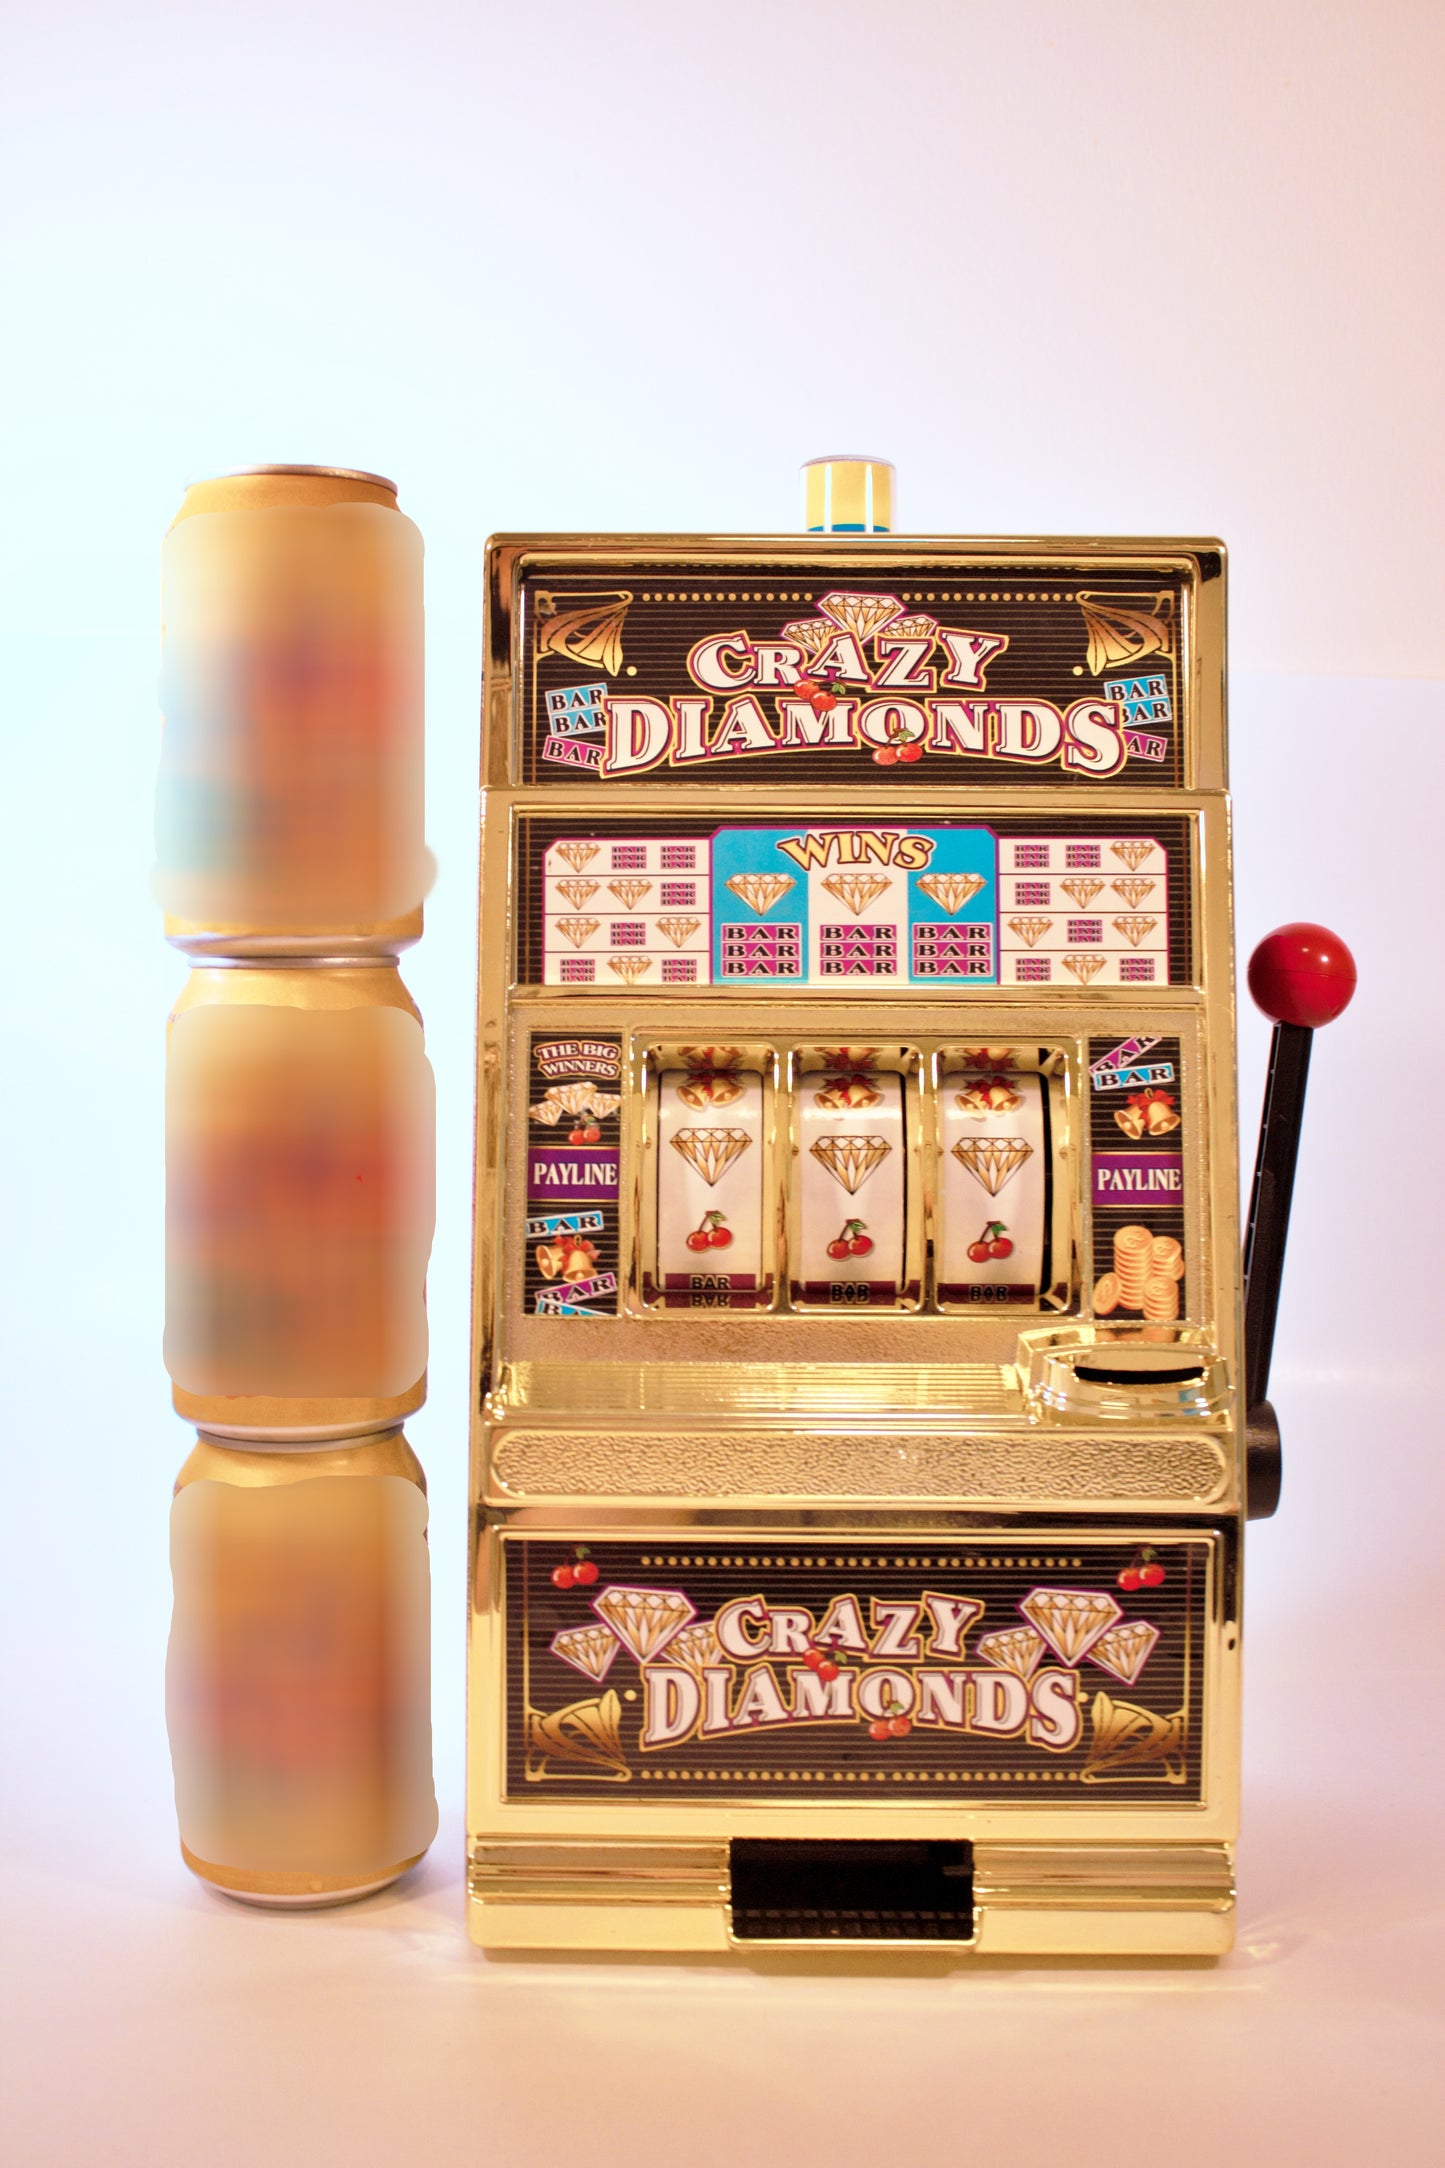 Jumbo Slot Machine with 50 Metal Coins